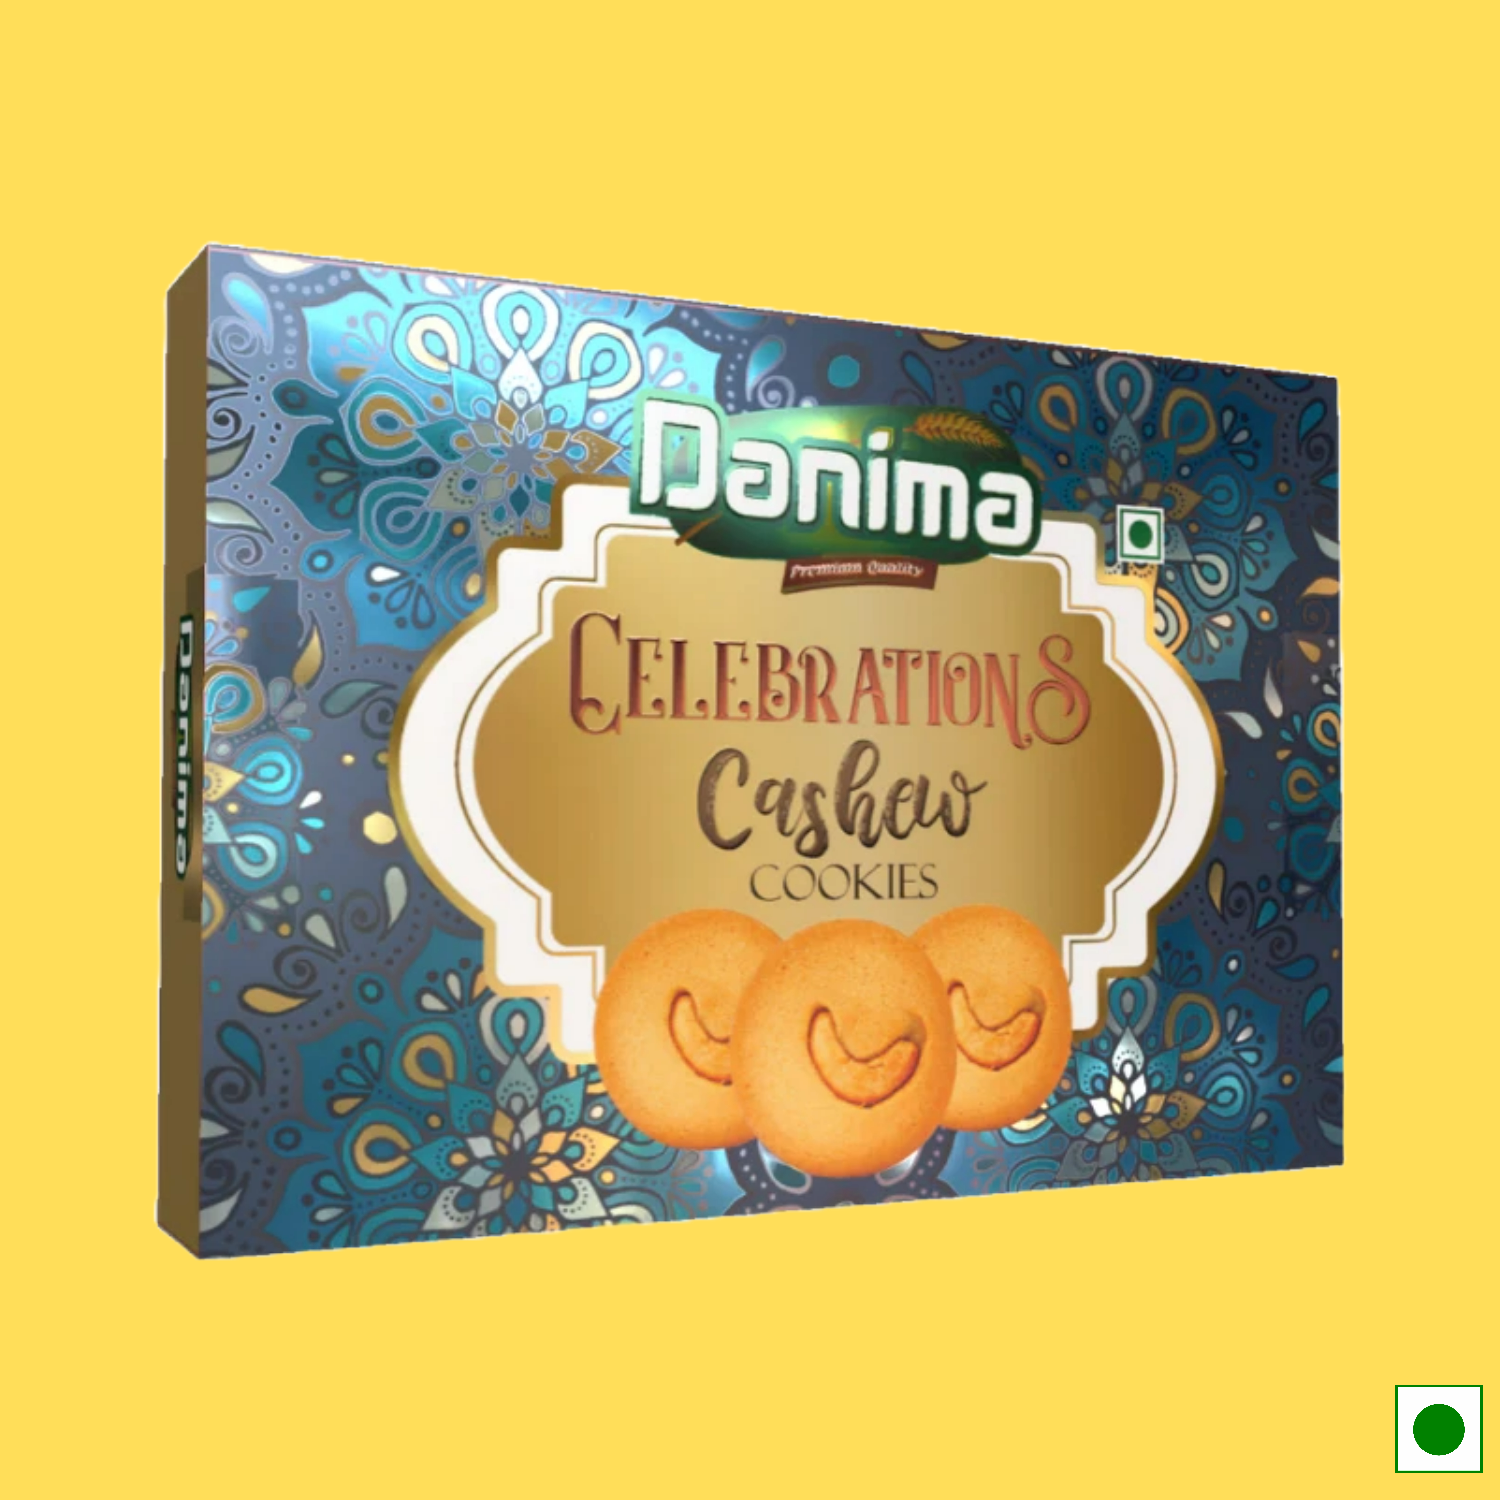 Danima Celebration Cashew Cookies, 300g